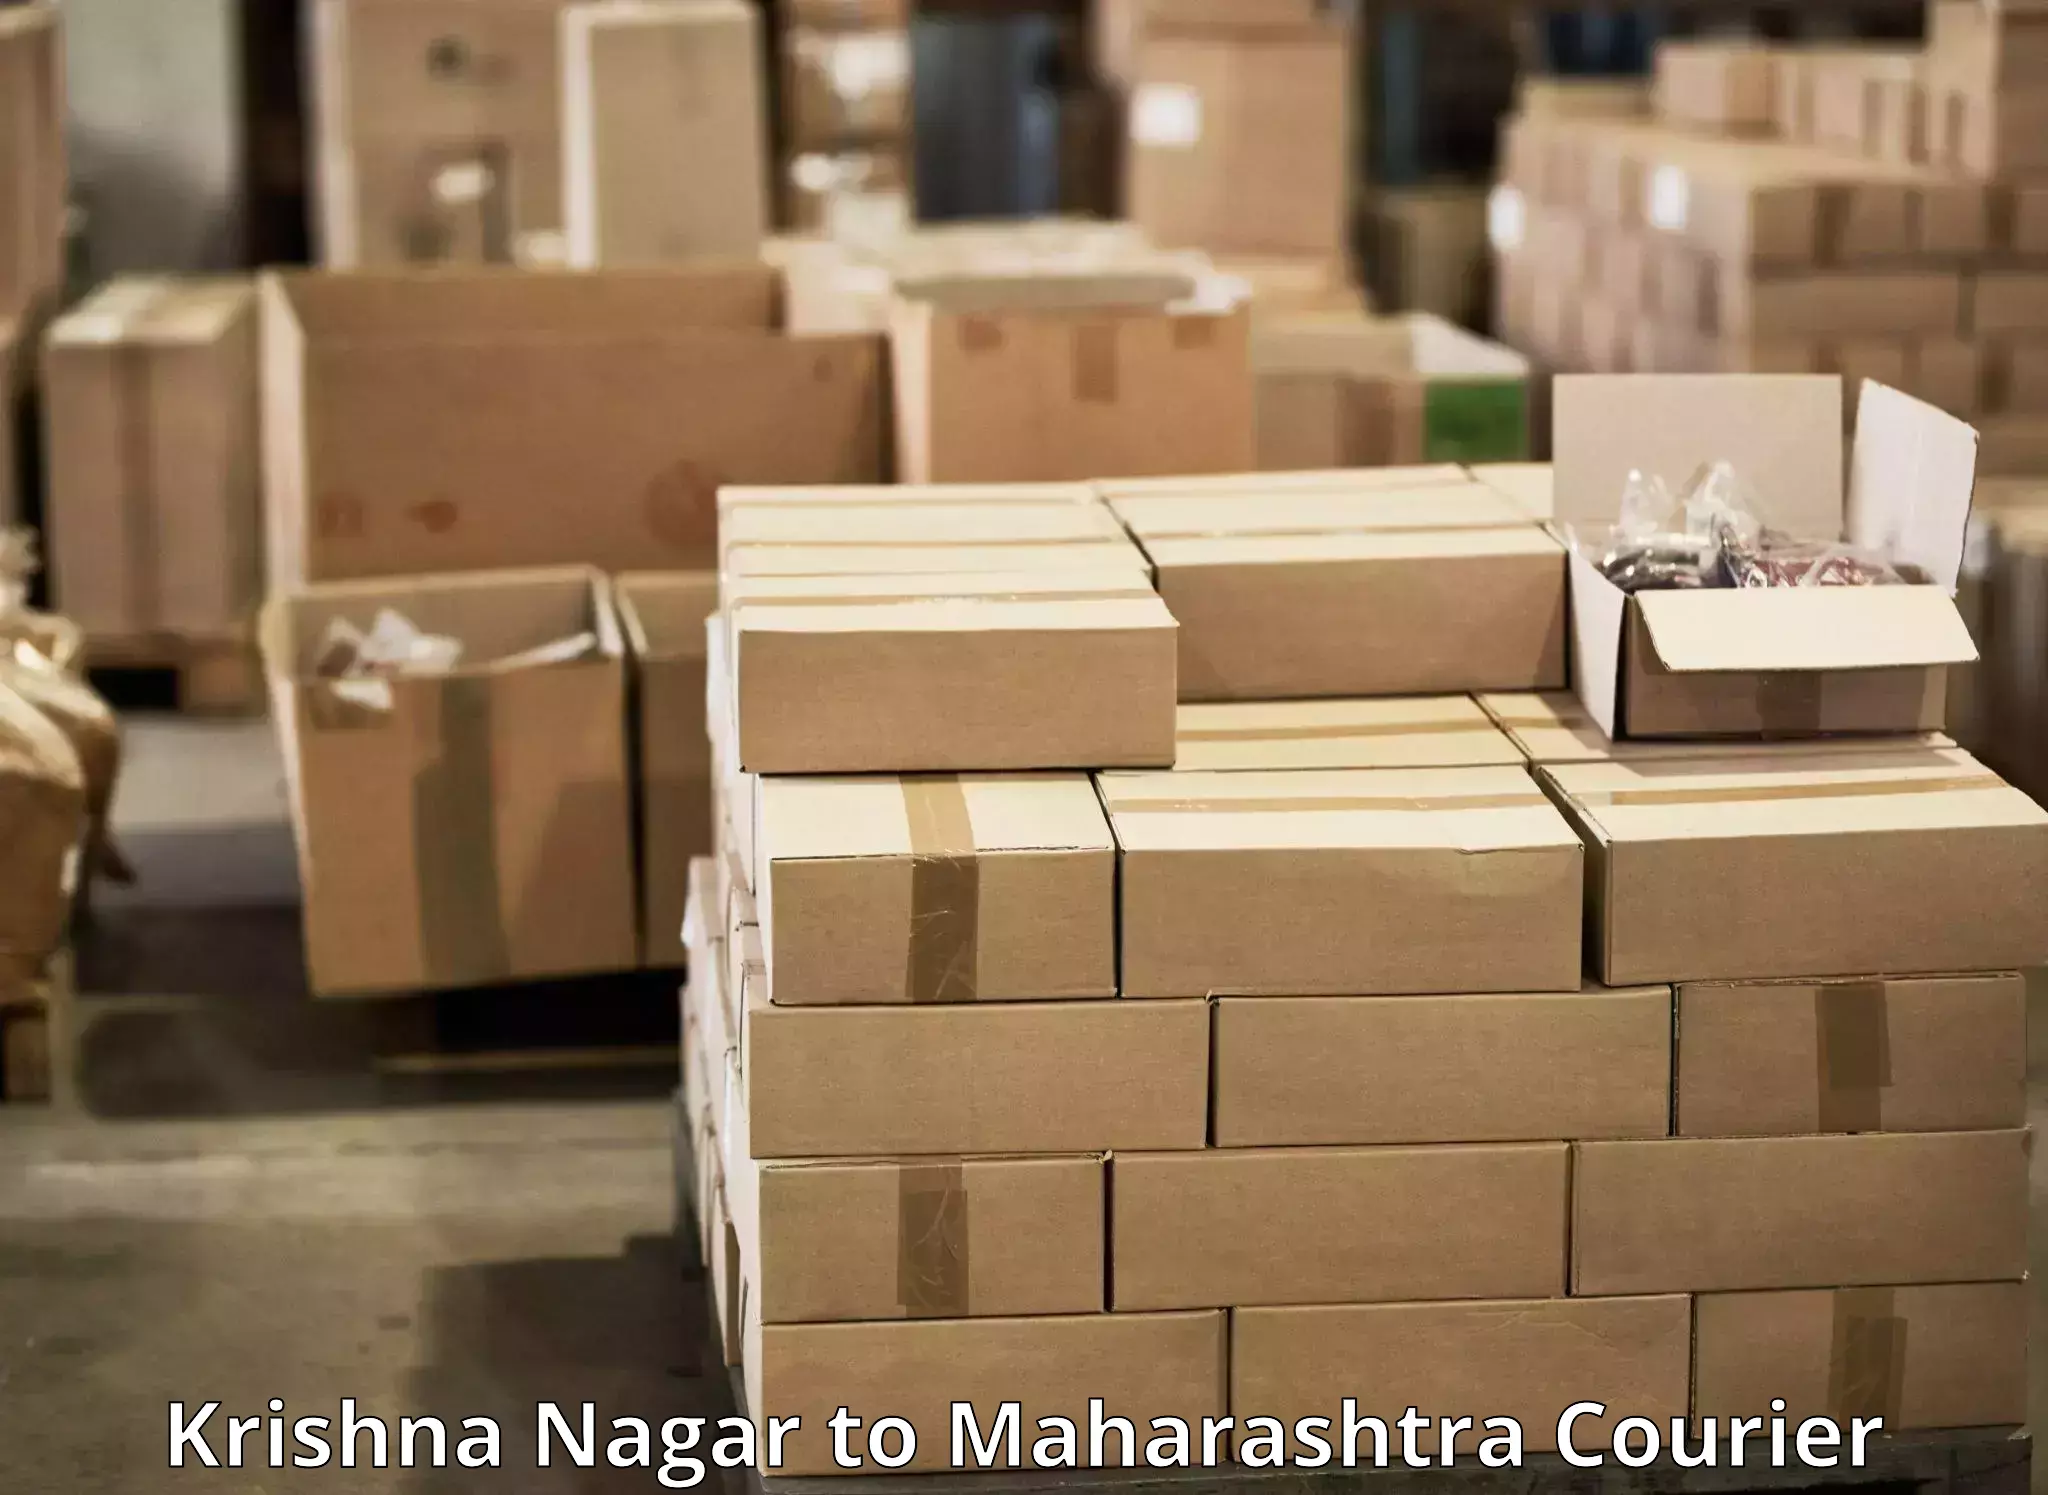 Courier service booking Krishna Nagar to Satara